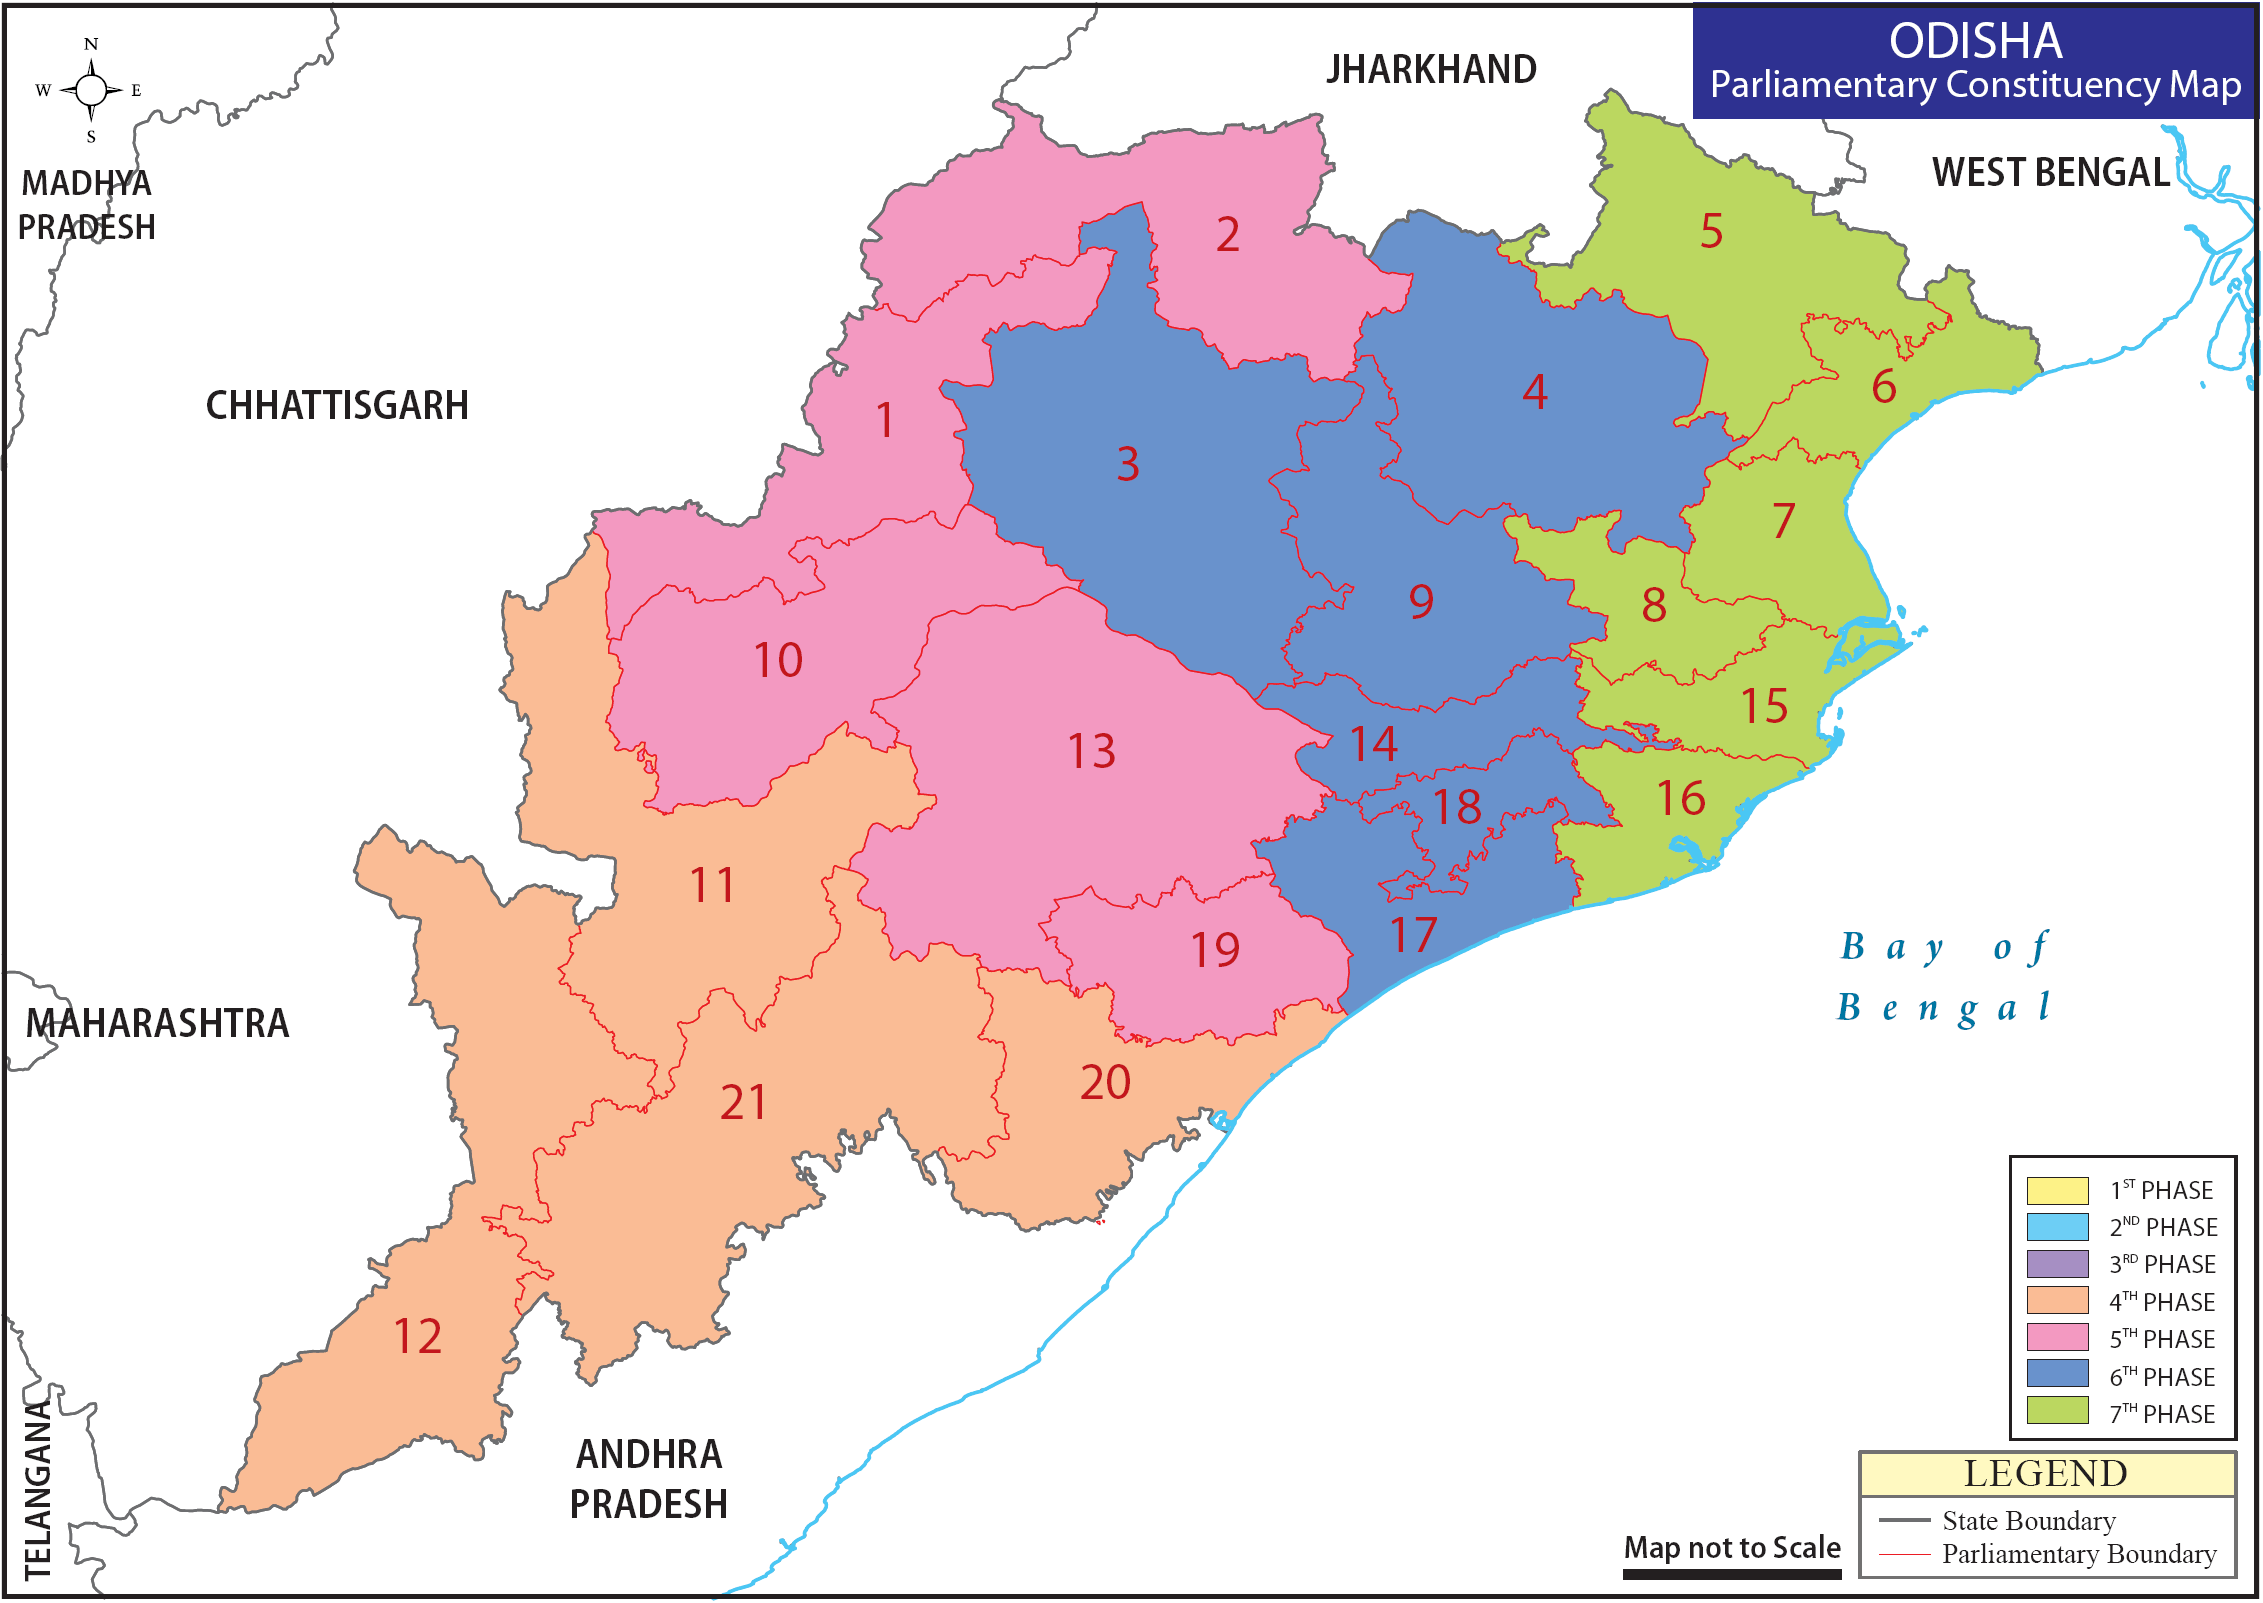 Odisha Parliamentary Constituency Map